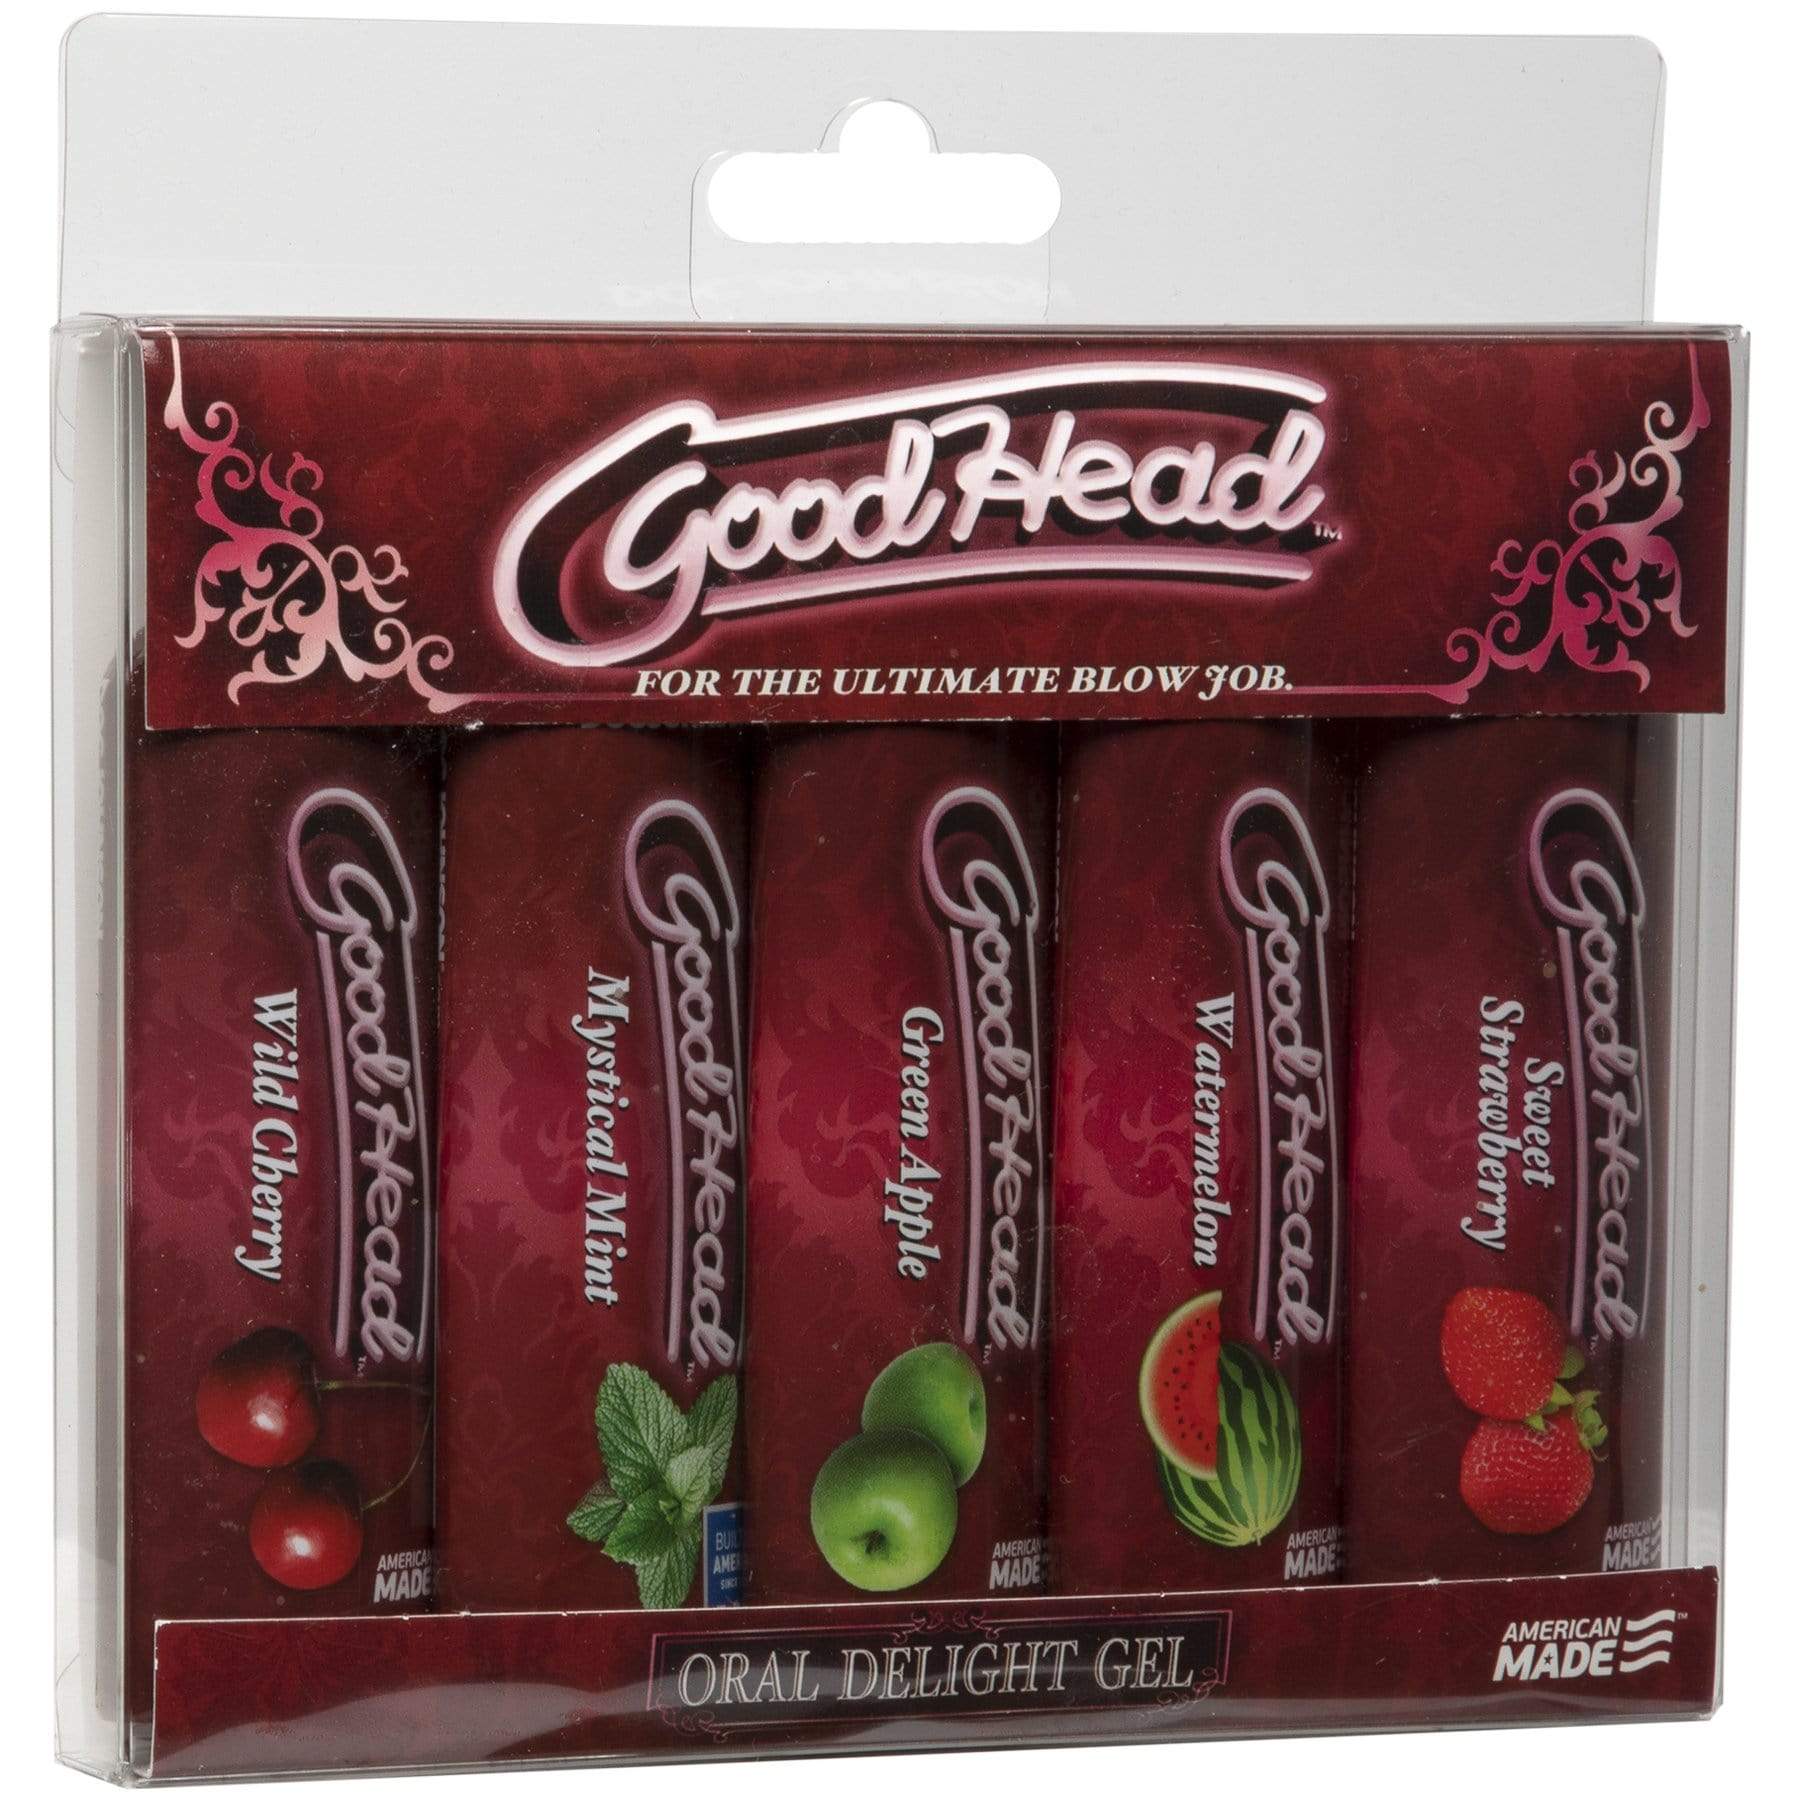 good head oral delight gel 5 pack